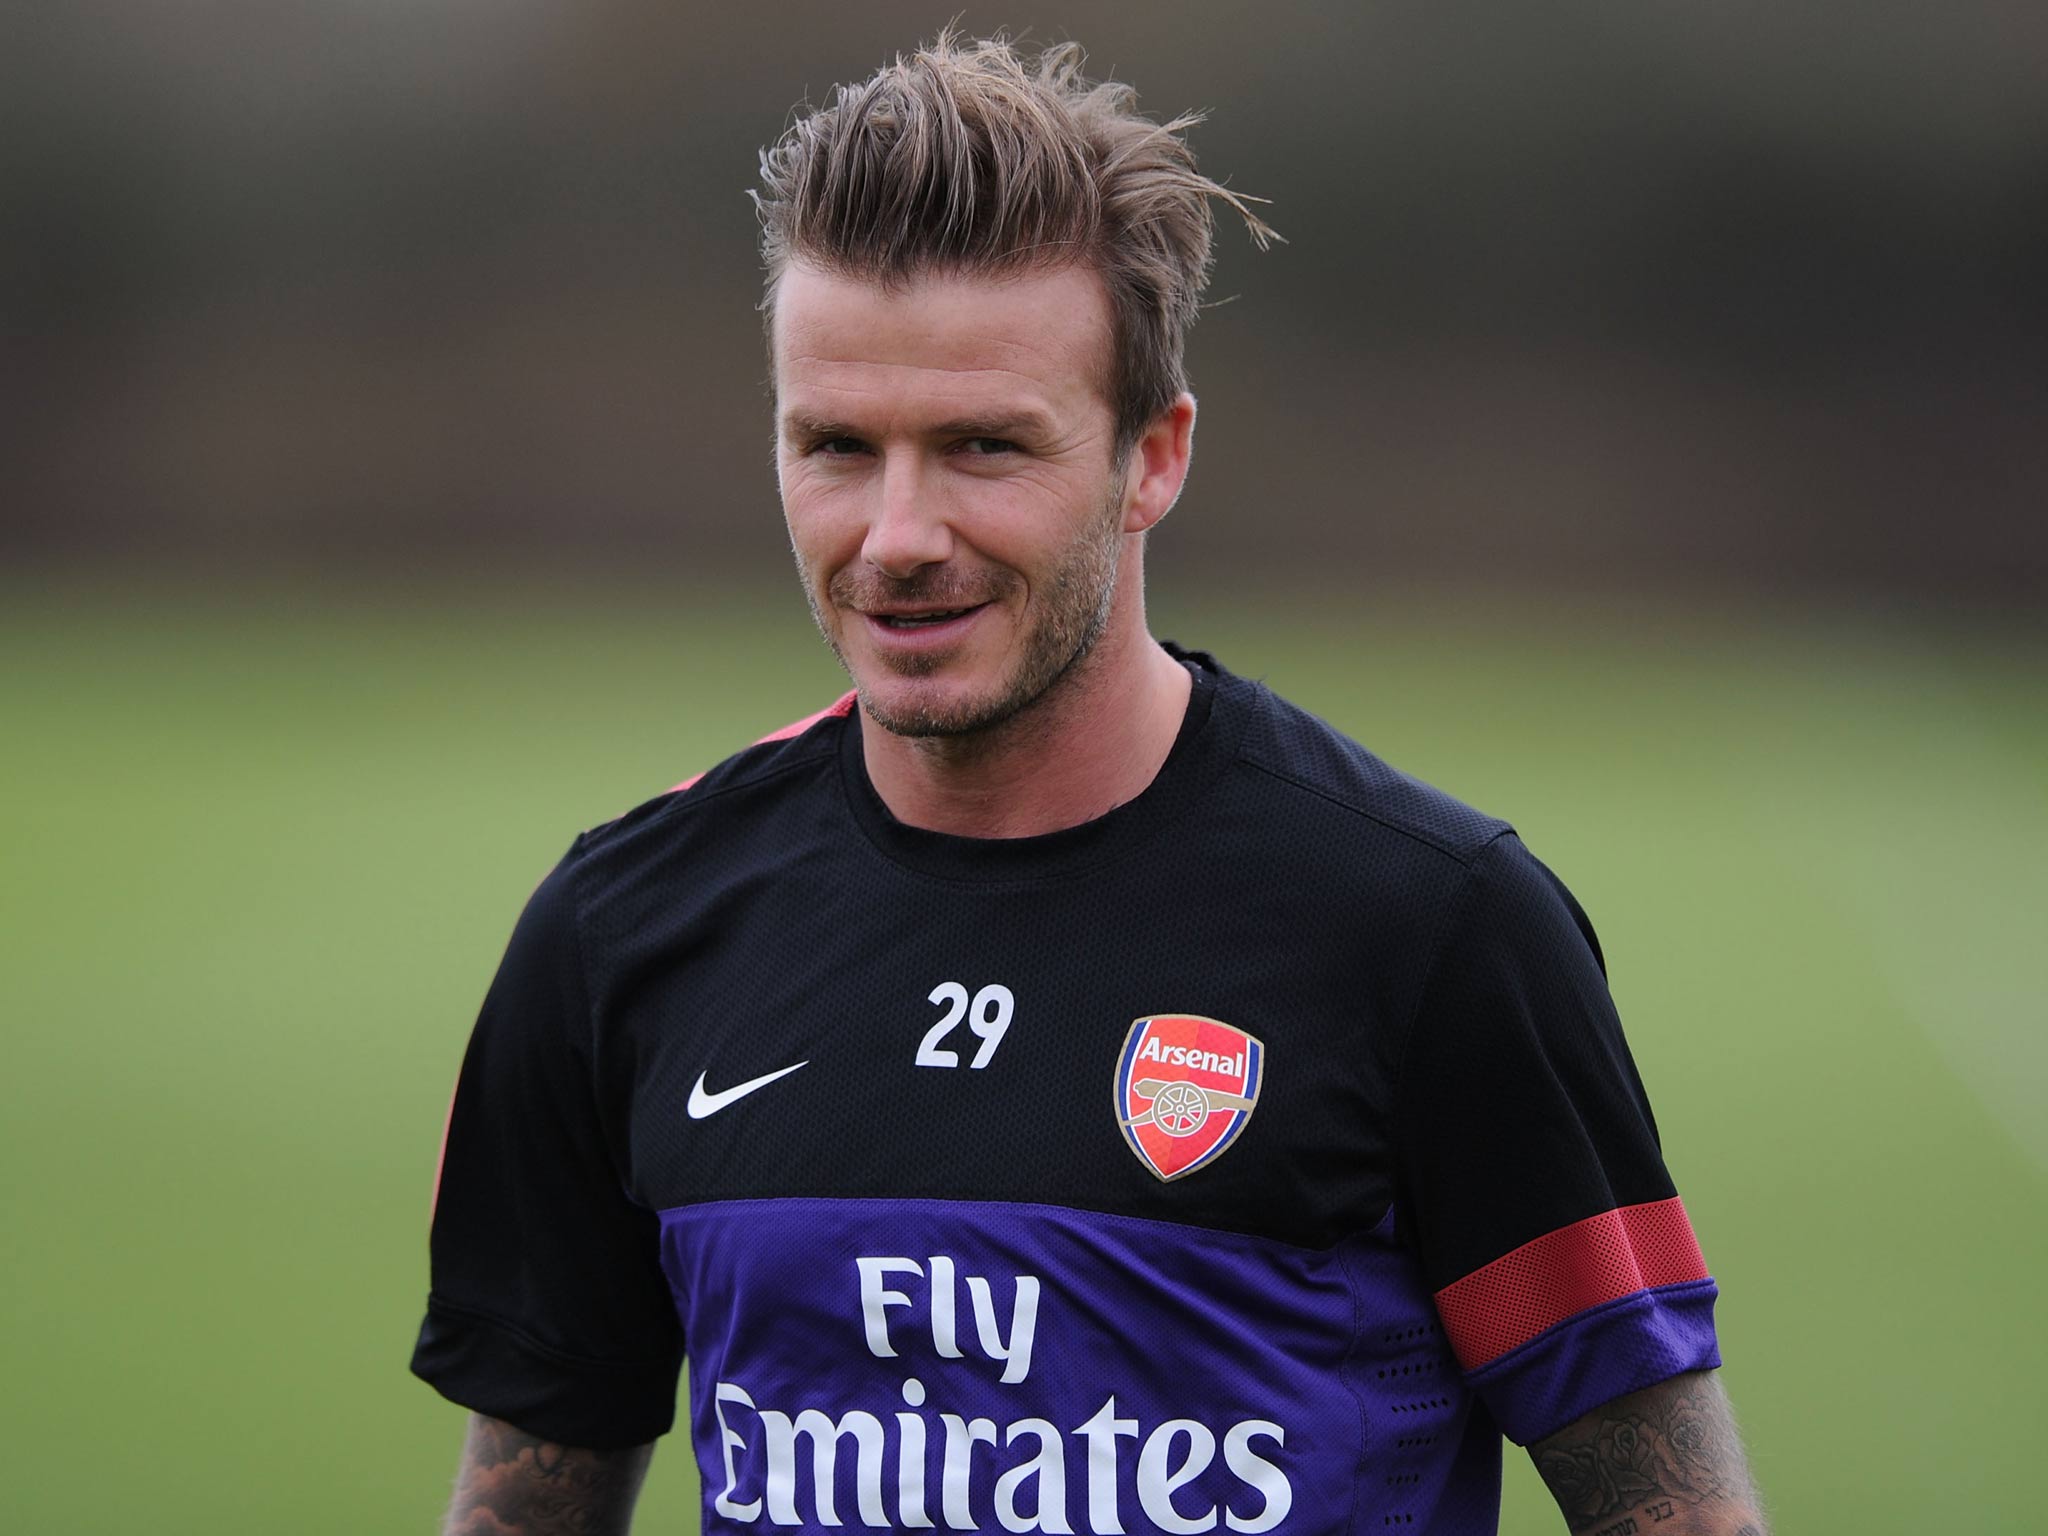 David Beckham training with Arsenal